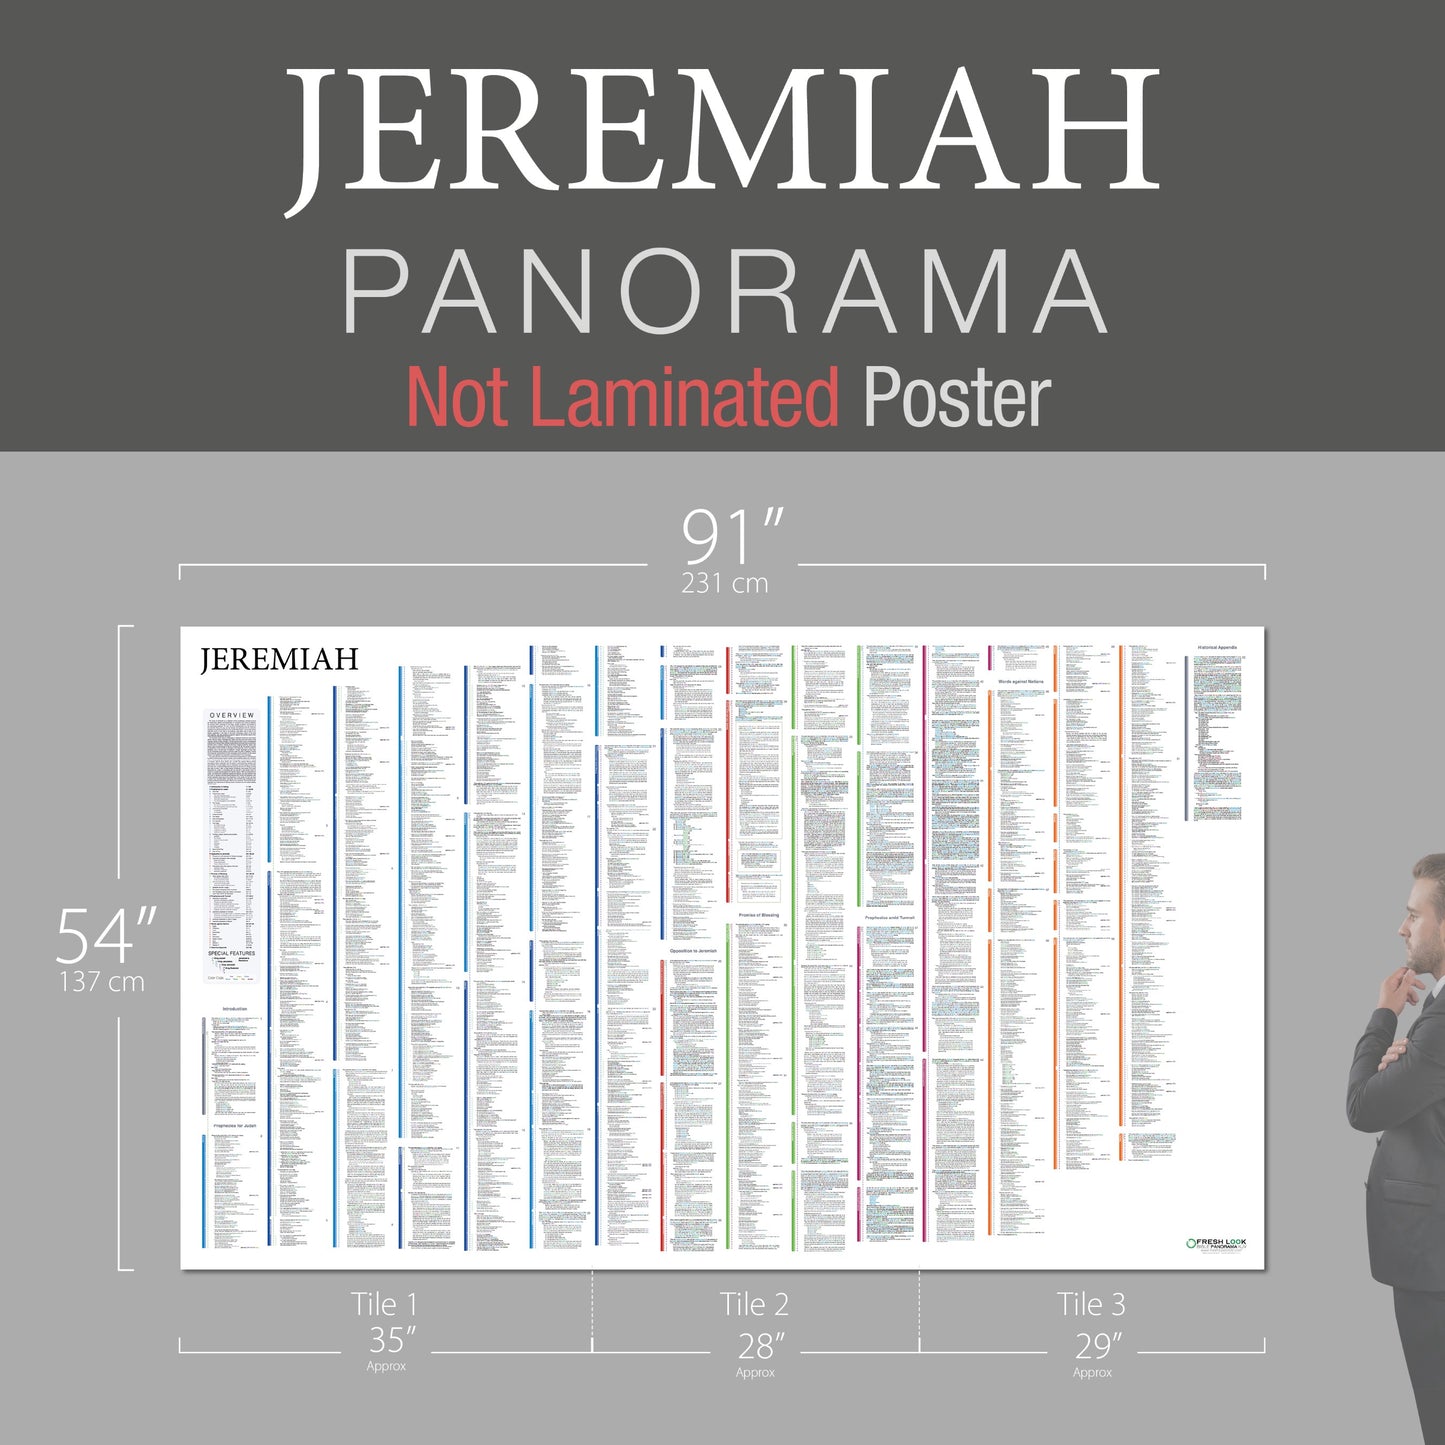 Jeremiah Panorama Not Laminated